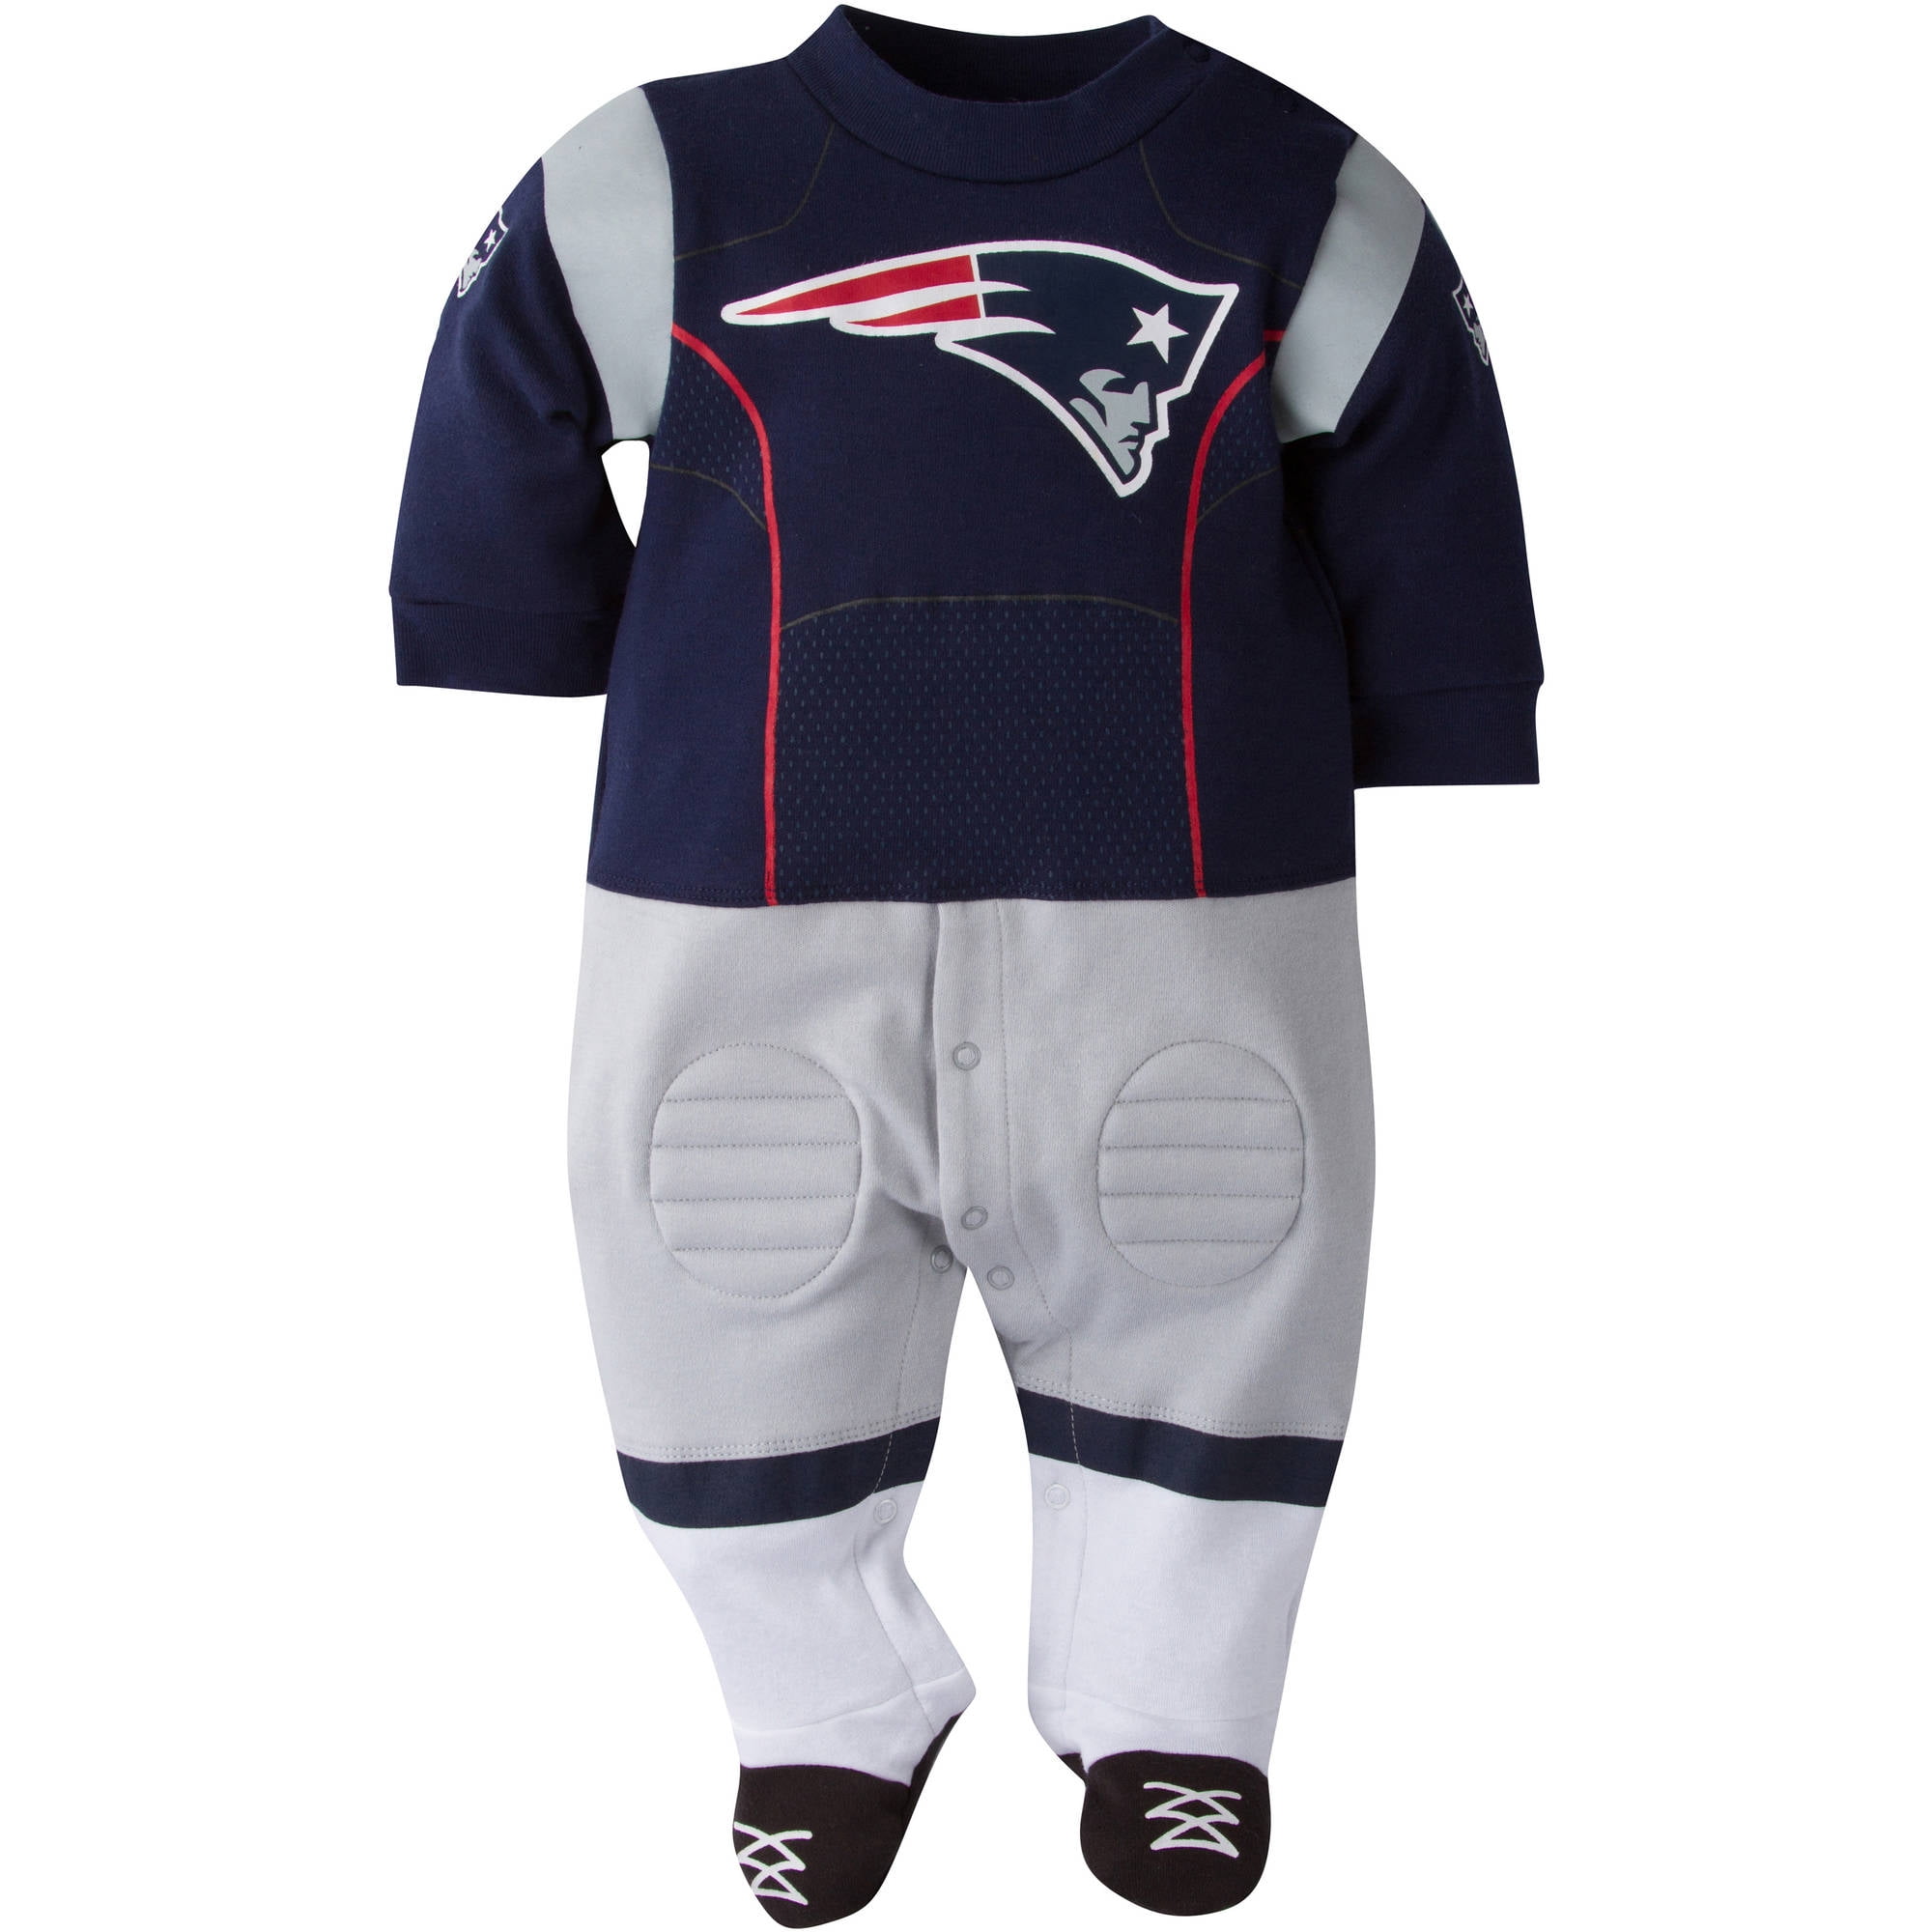 custom baby patriots jersey